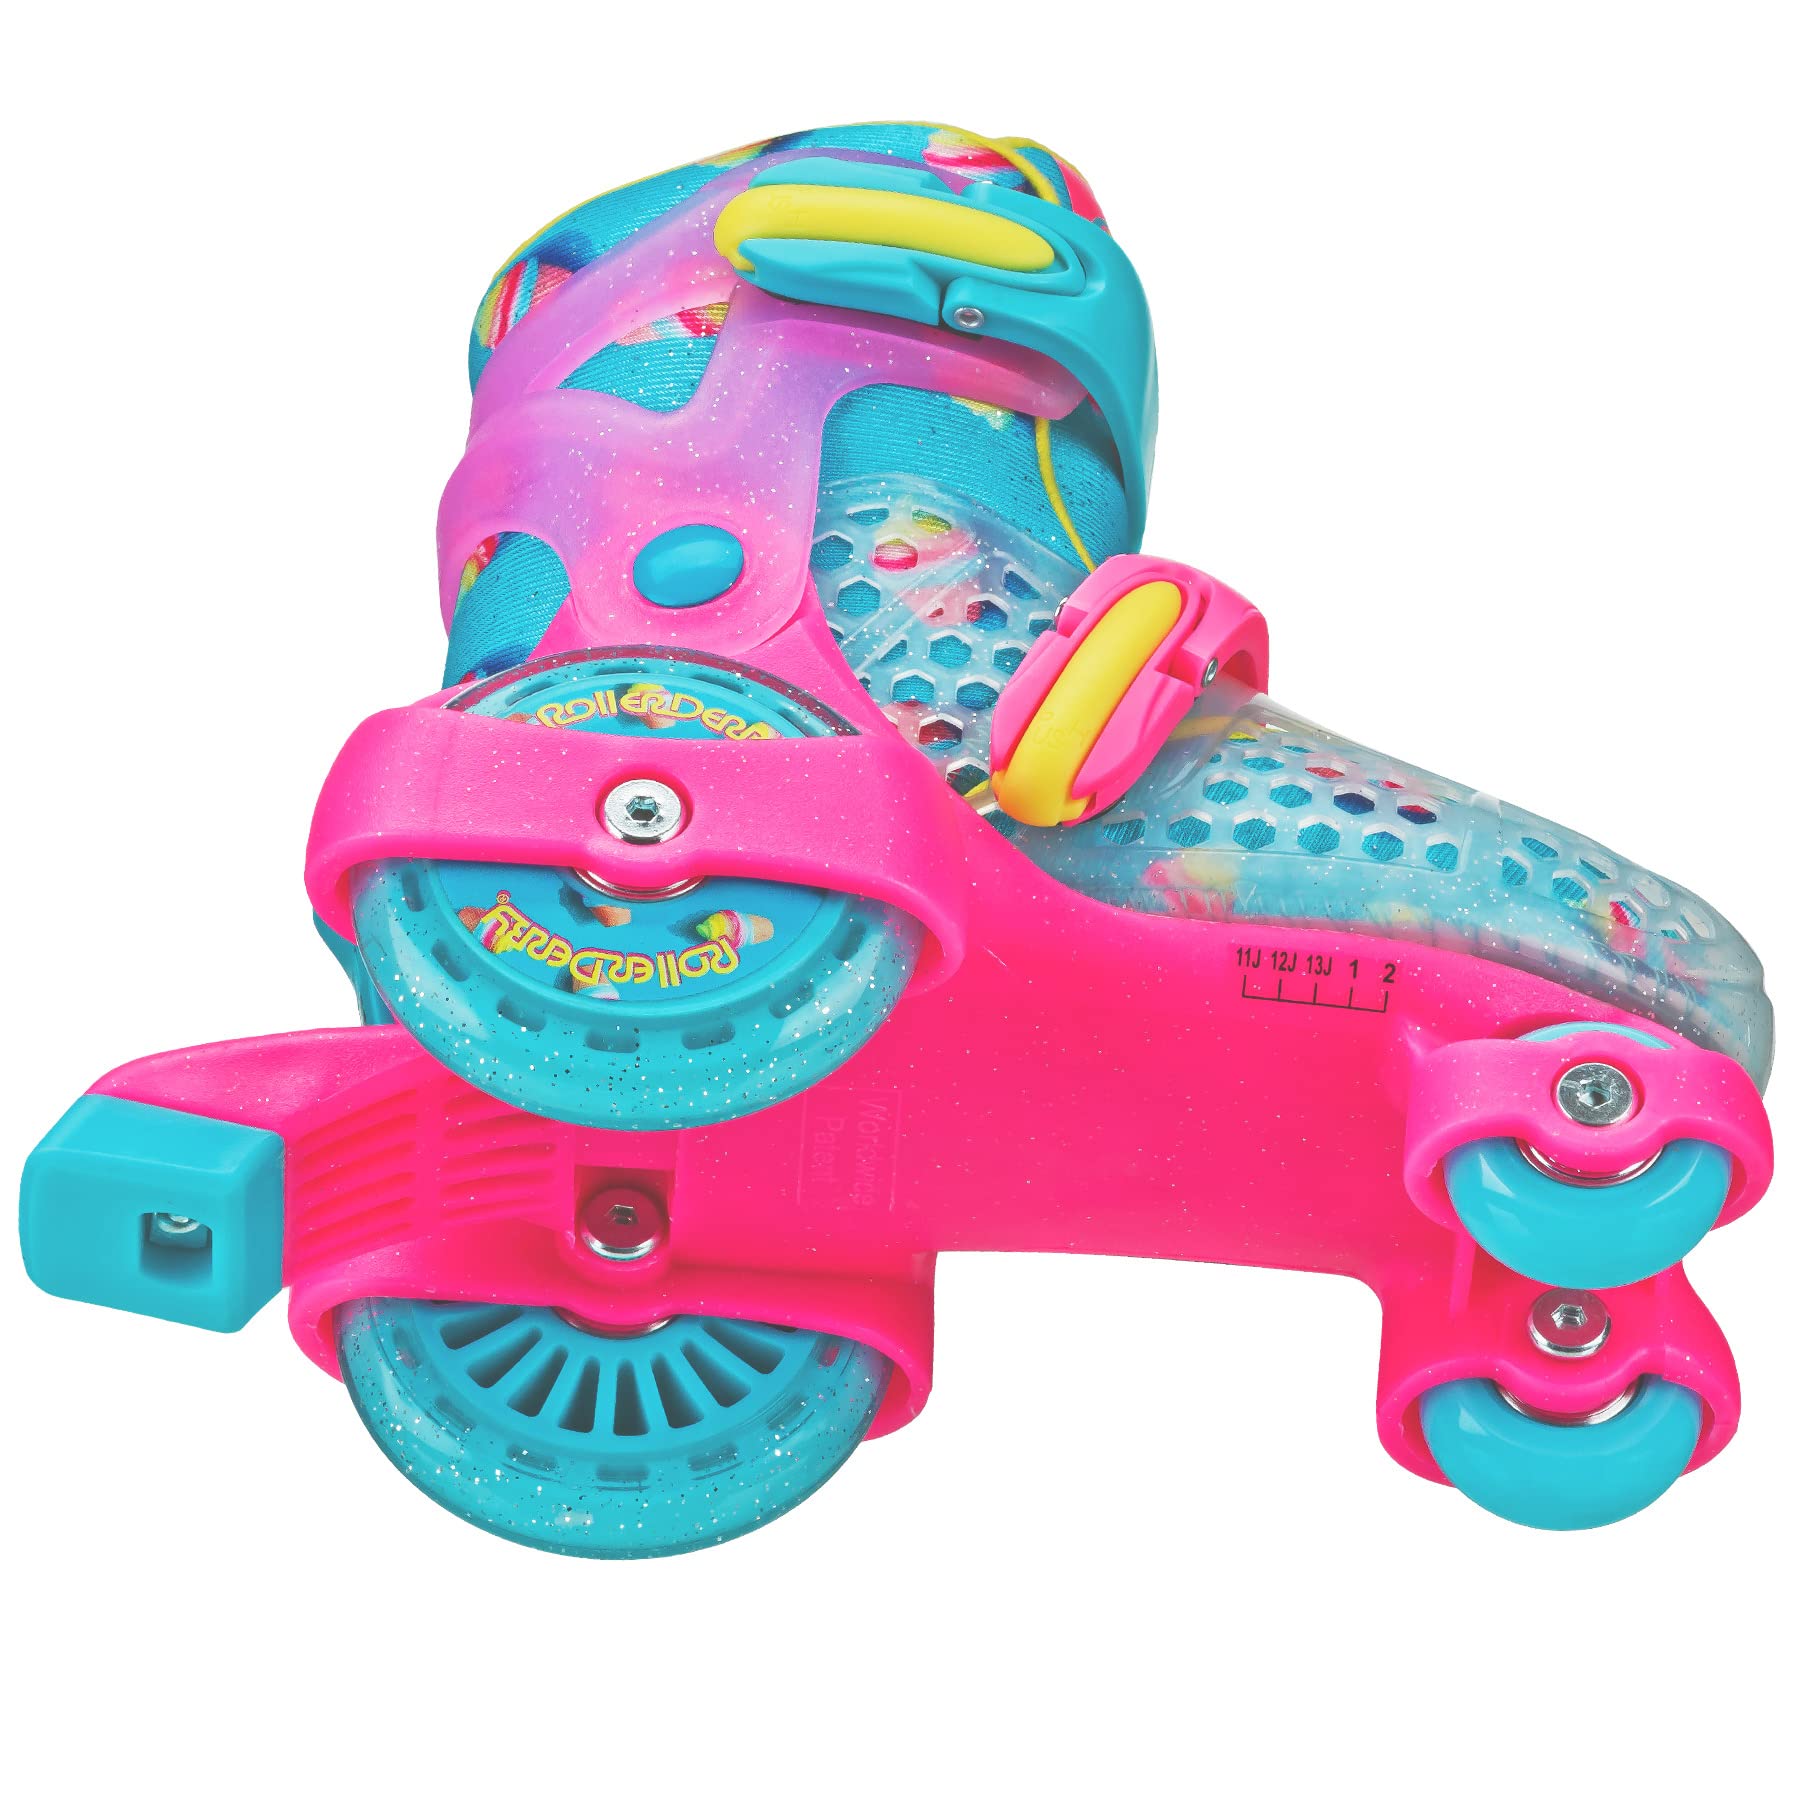 Roller Derby Fun Roll Adjustable Roller Skates for Beginners, Boys & Girls Medium (11-2)